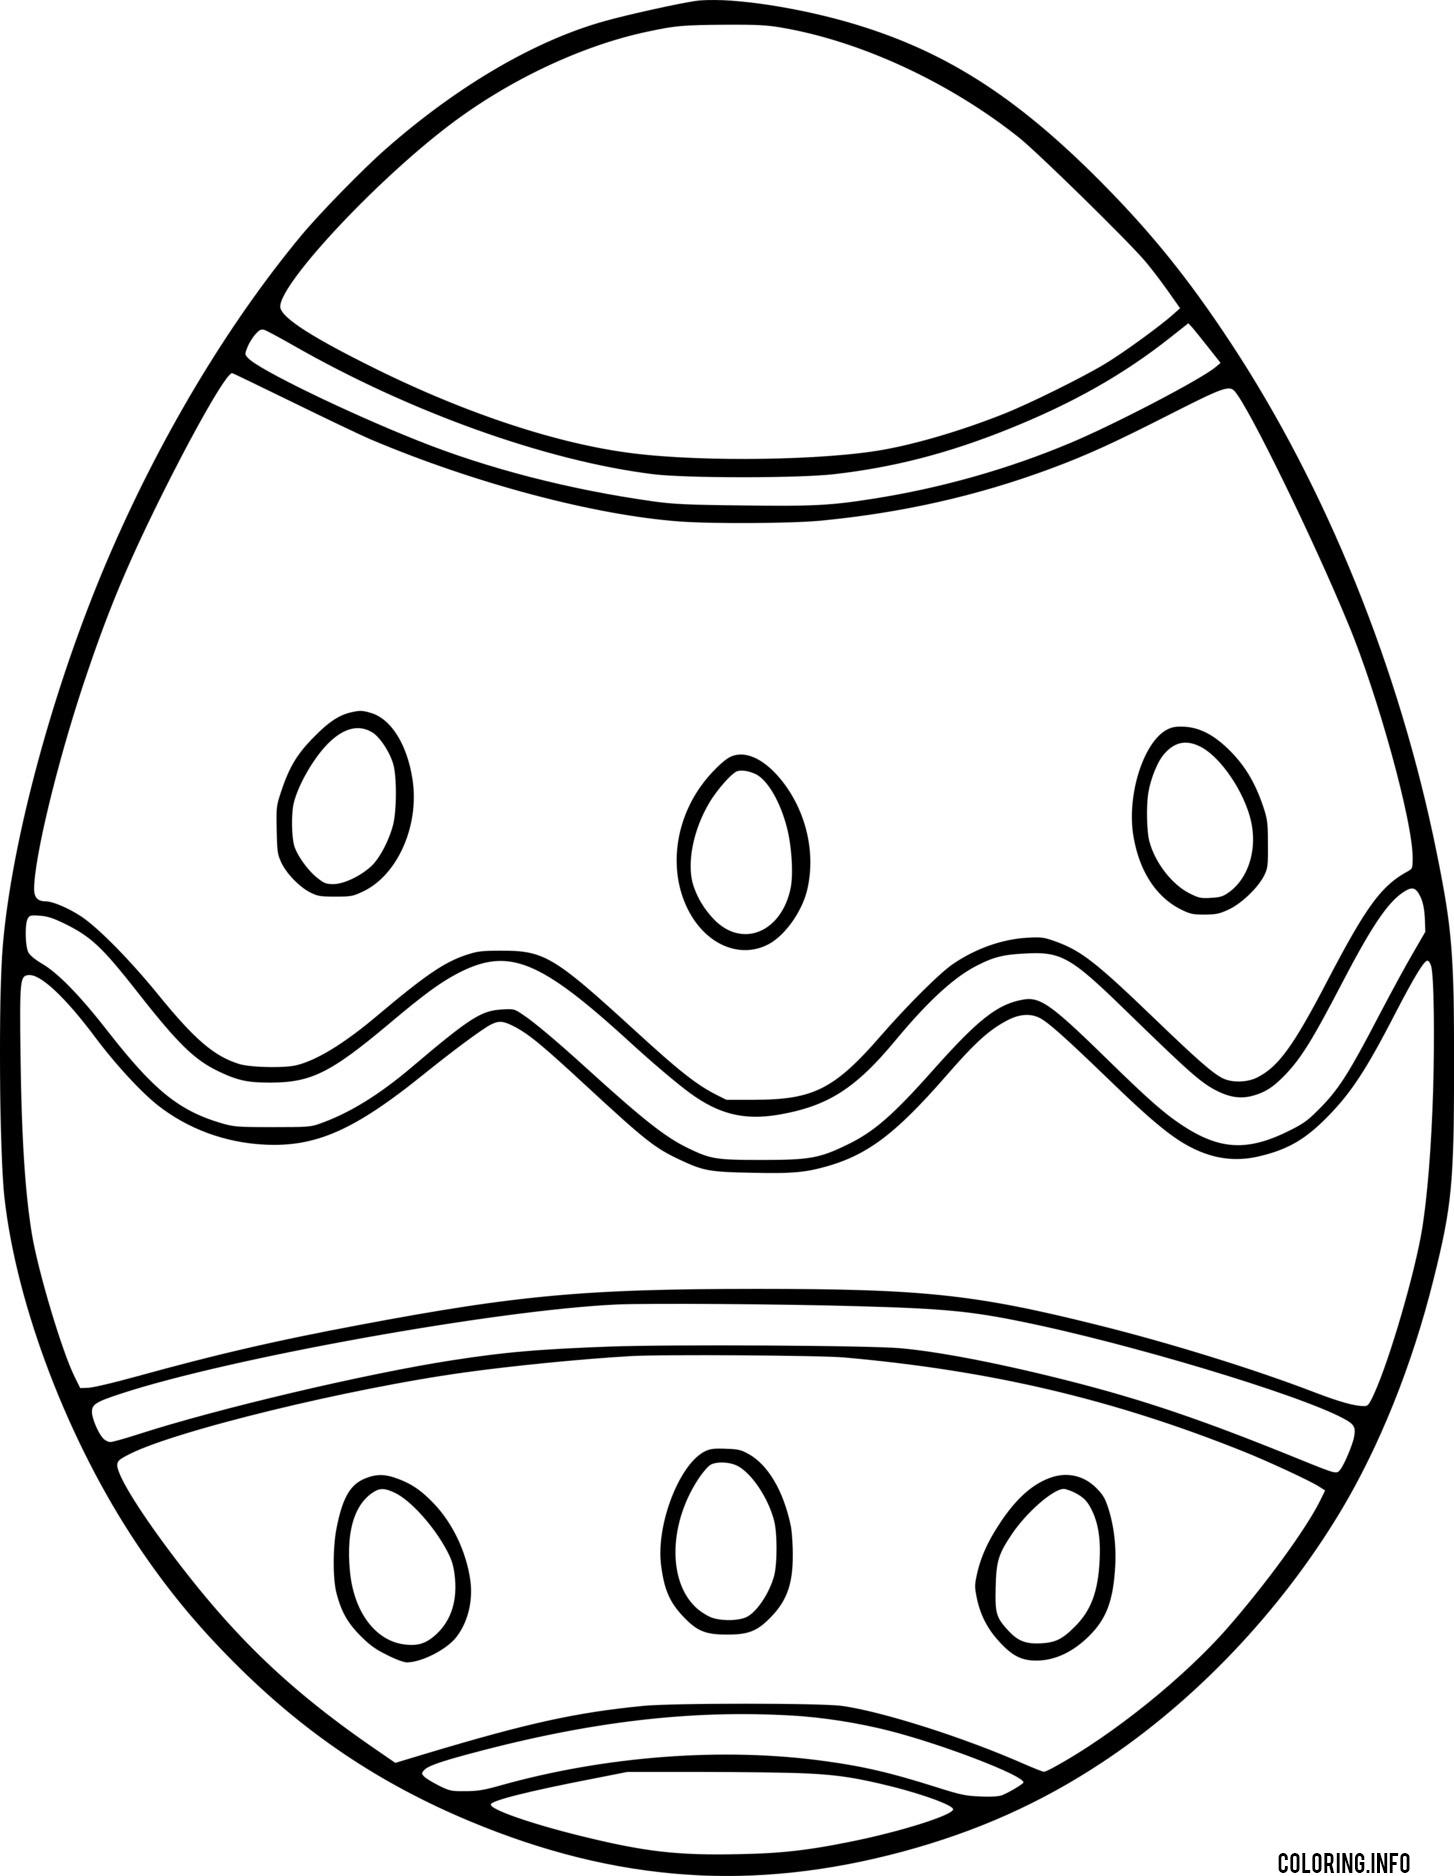 Easy Pattern Easter Egg coloring